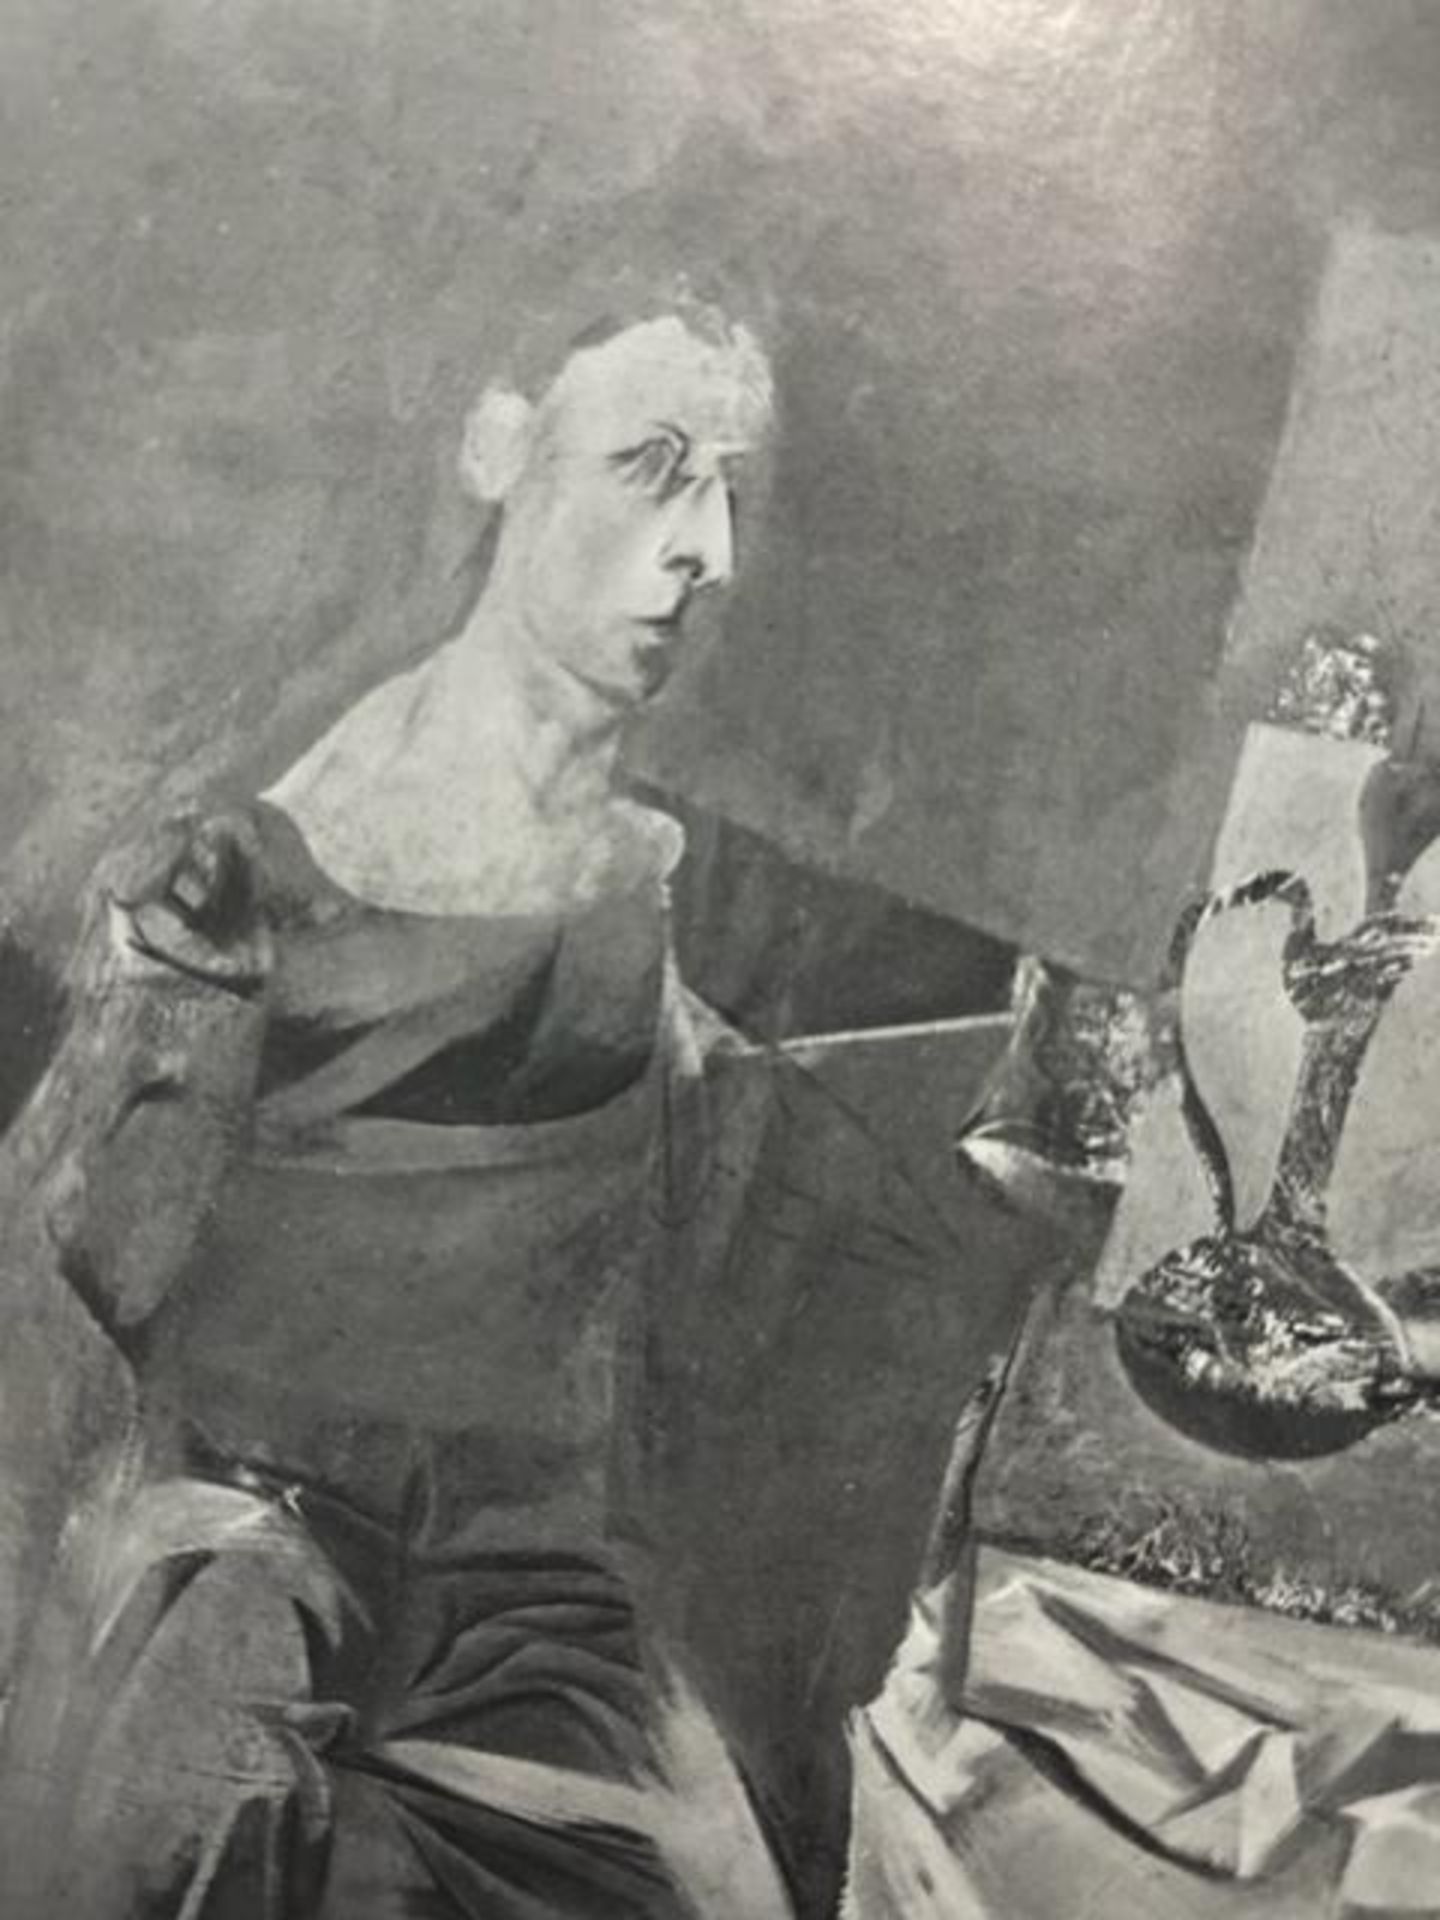 Willem de Kooning "Glazier" Print. - Bild 6 aus 6